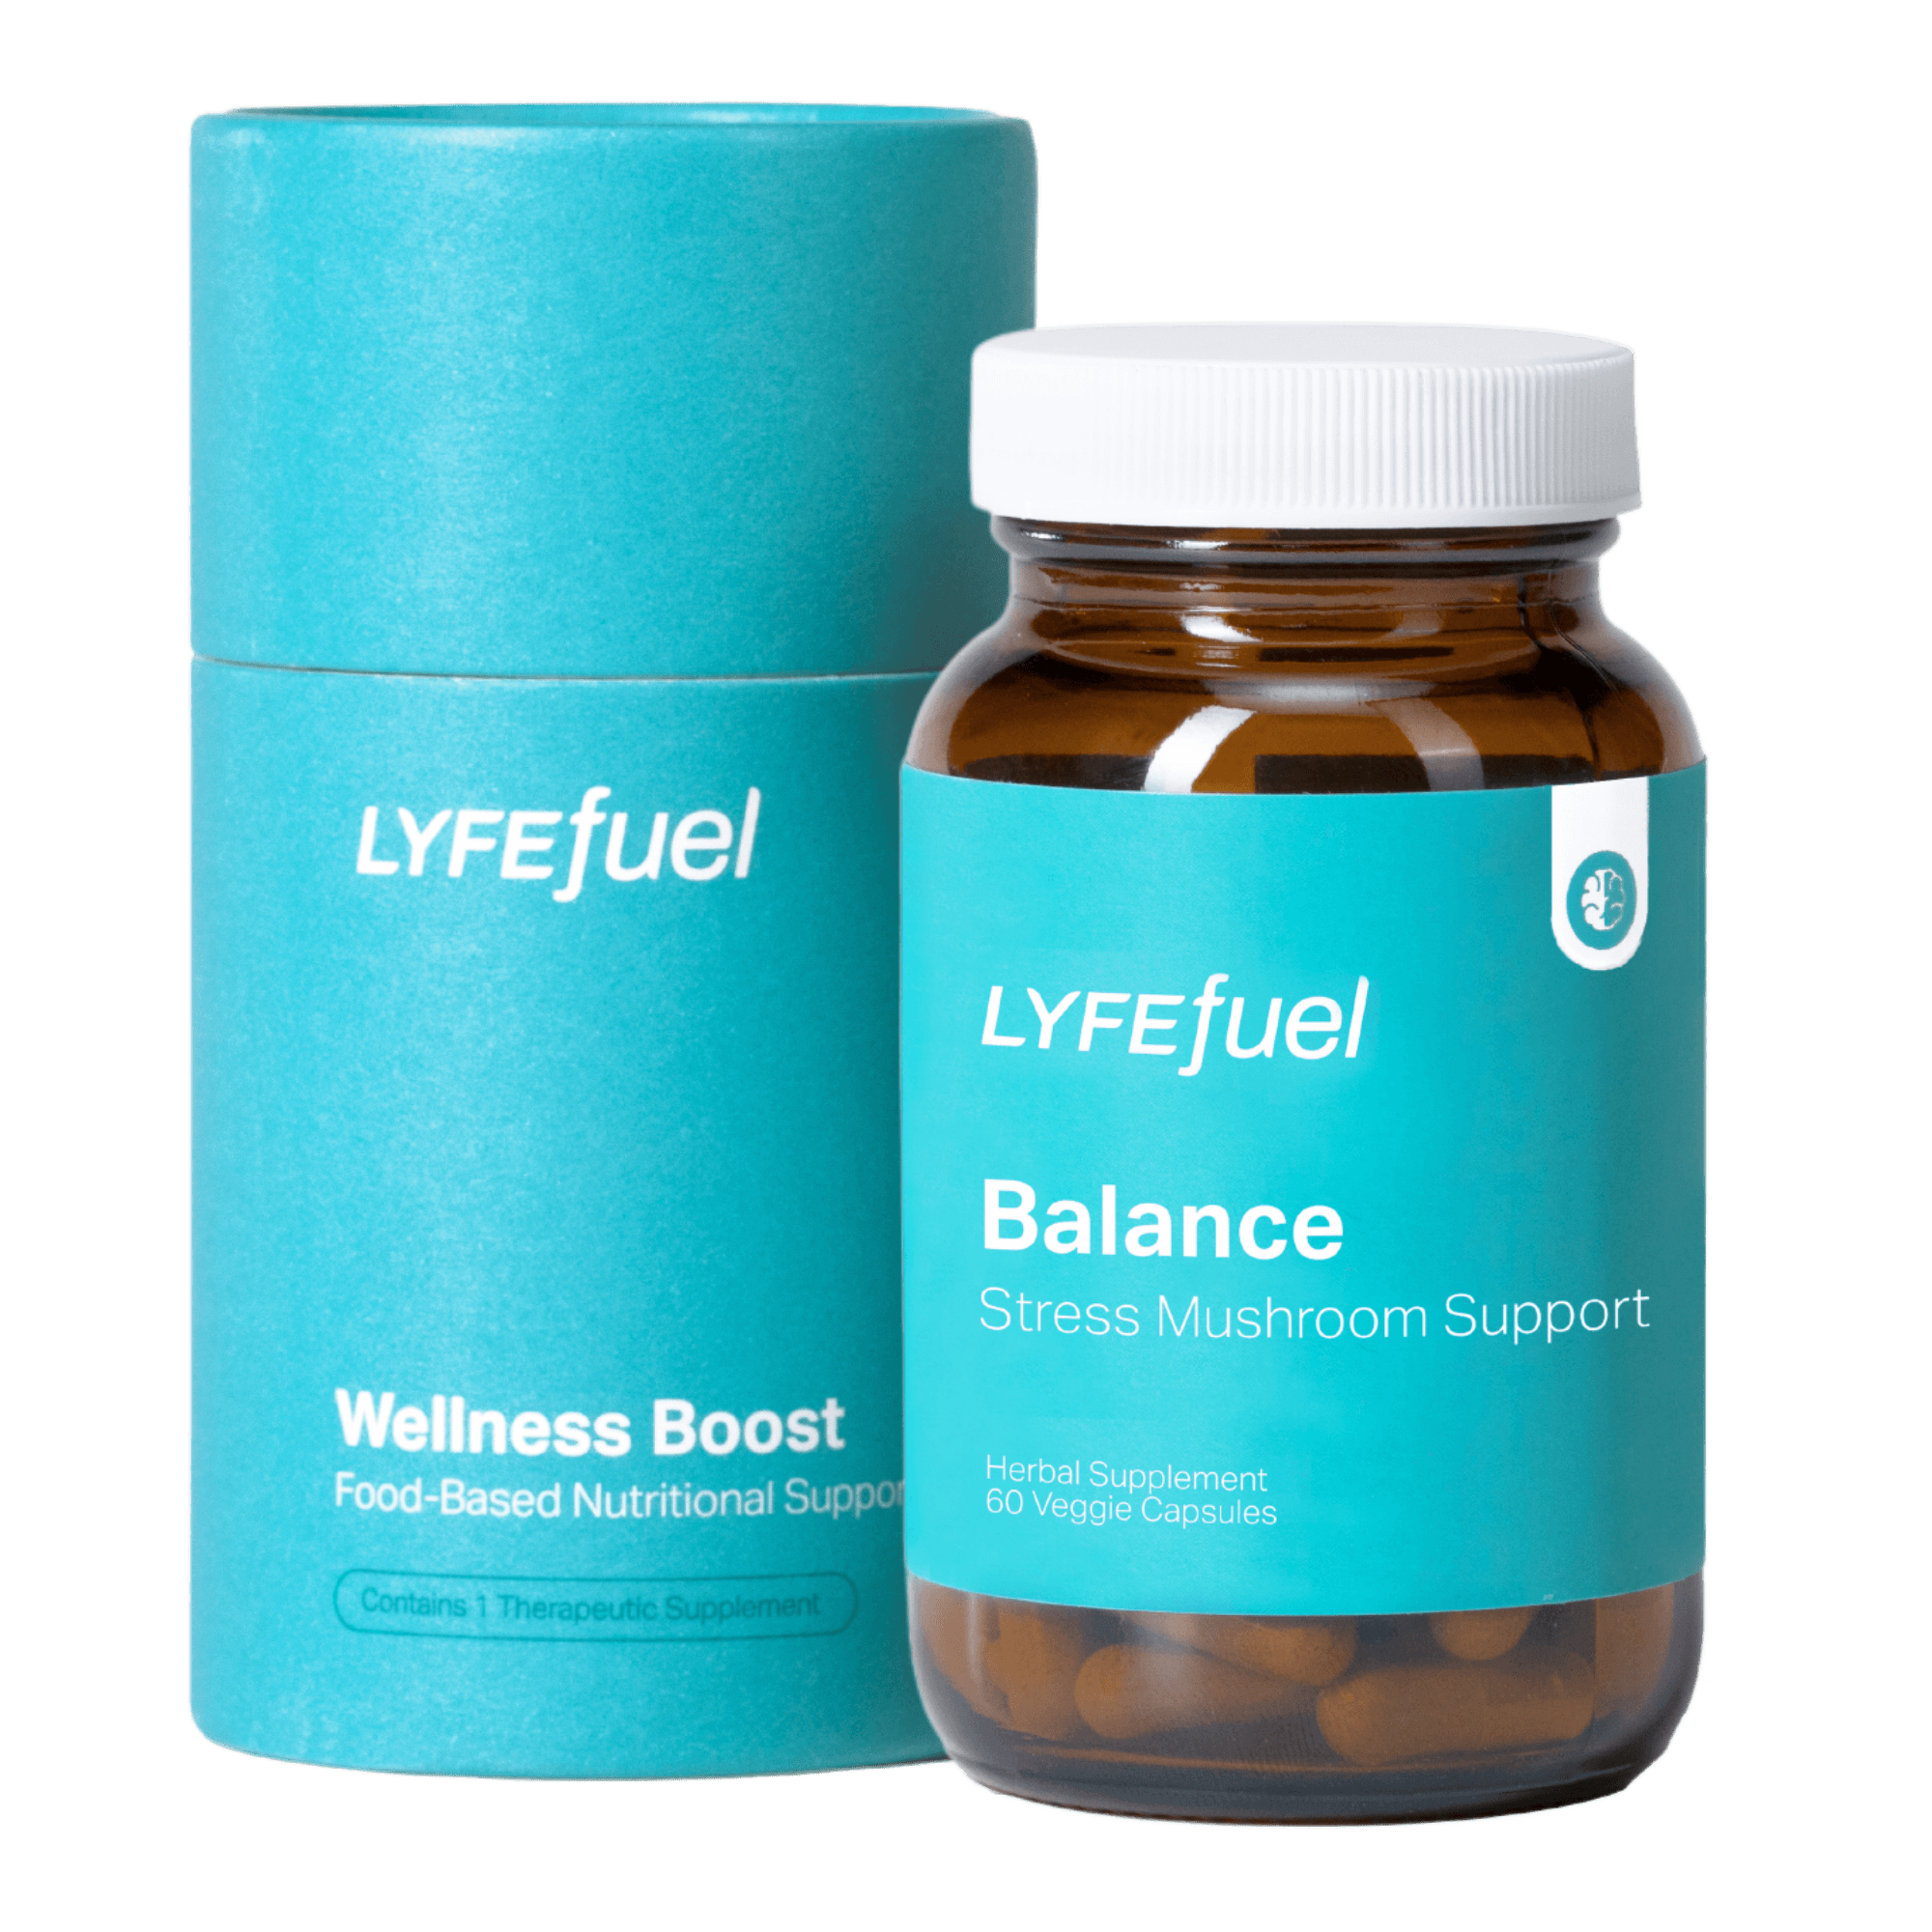 LYFE Fuel Wellness Boosts